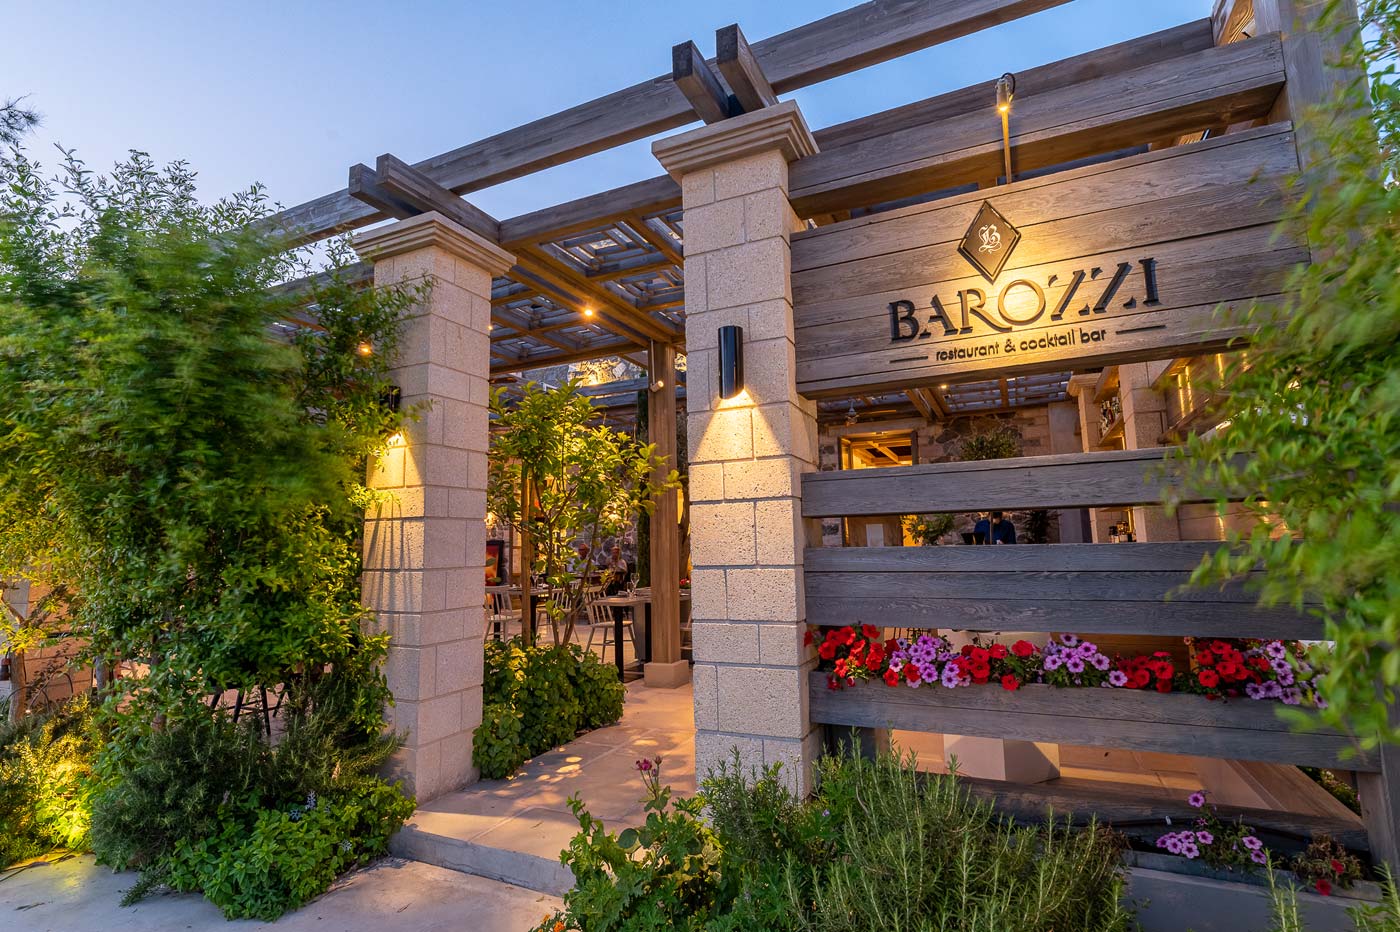 About Barozzi Restaurant Naxos